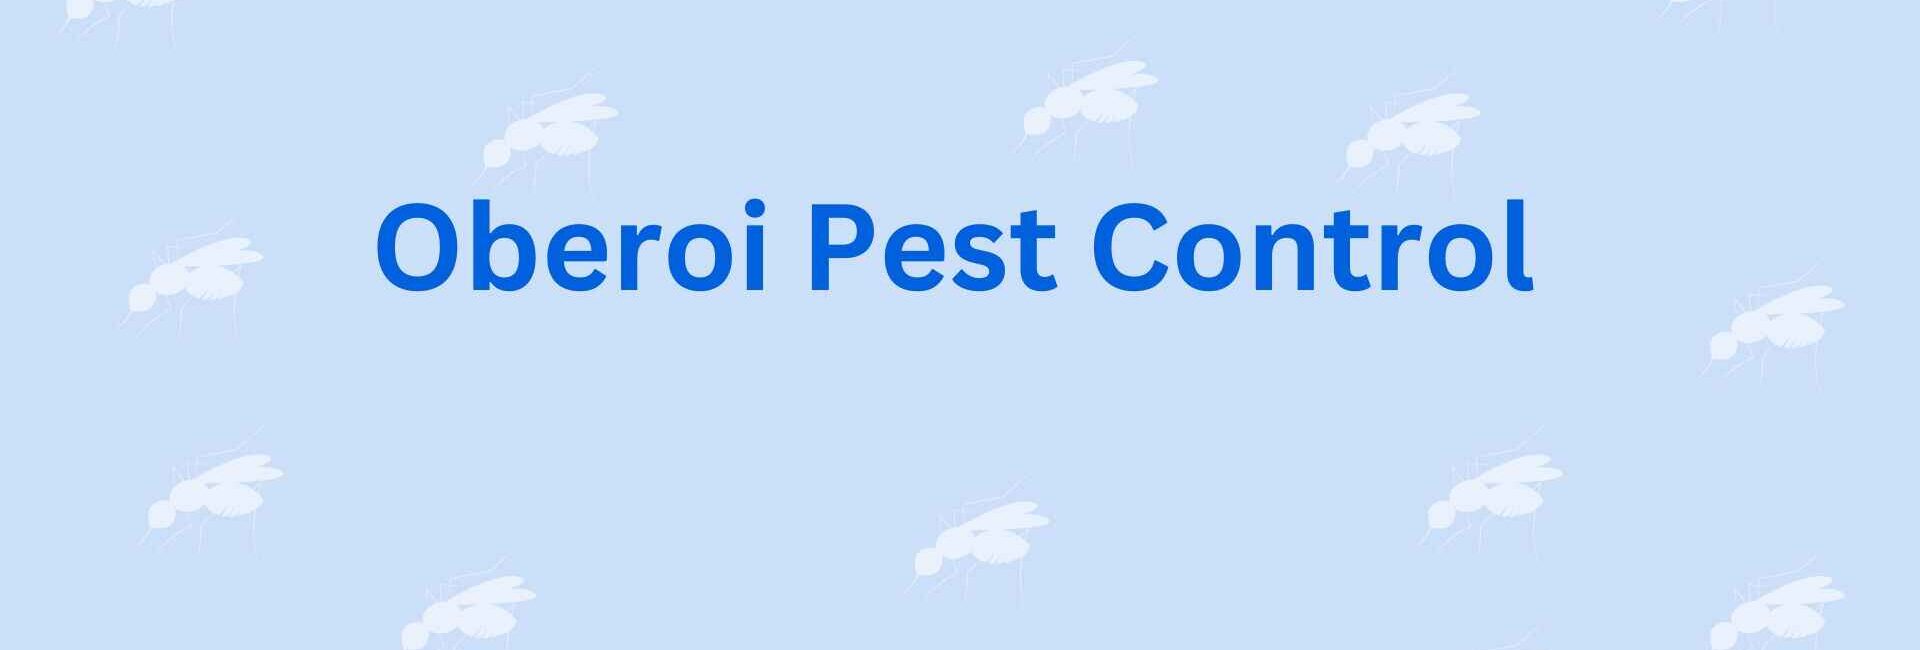 Oberoi Pest Control - Pest Control in Noida